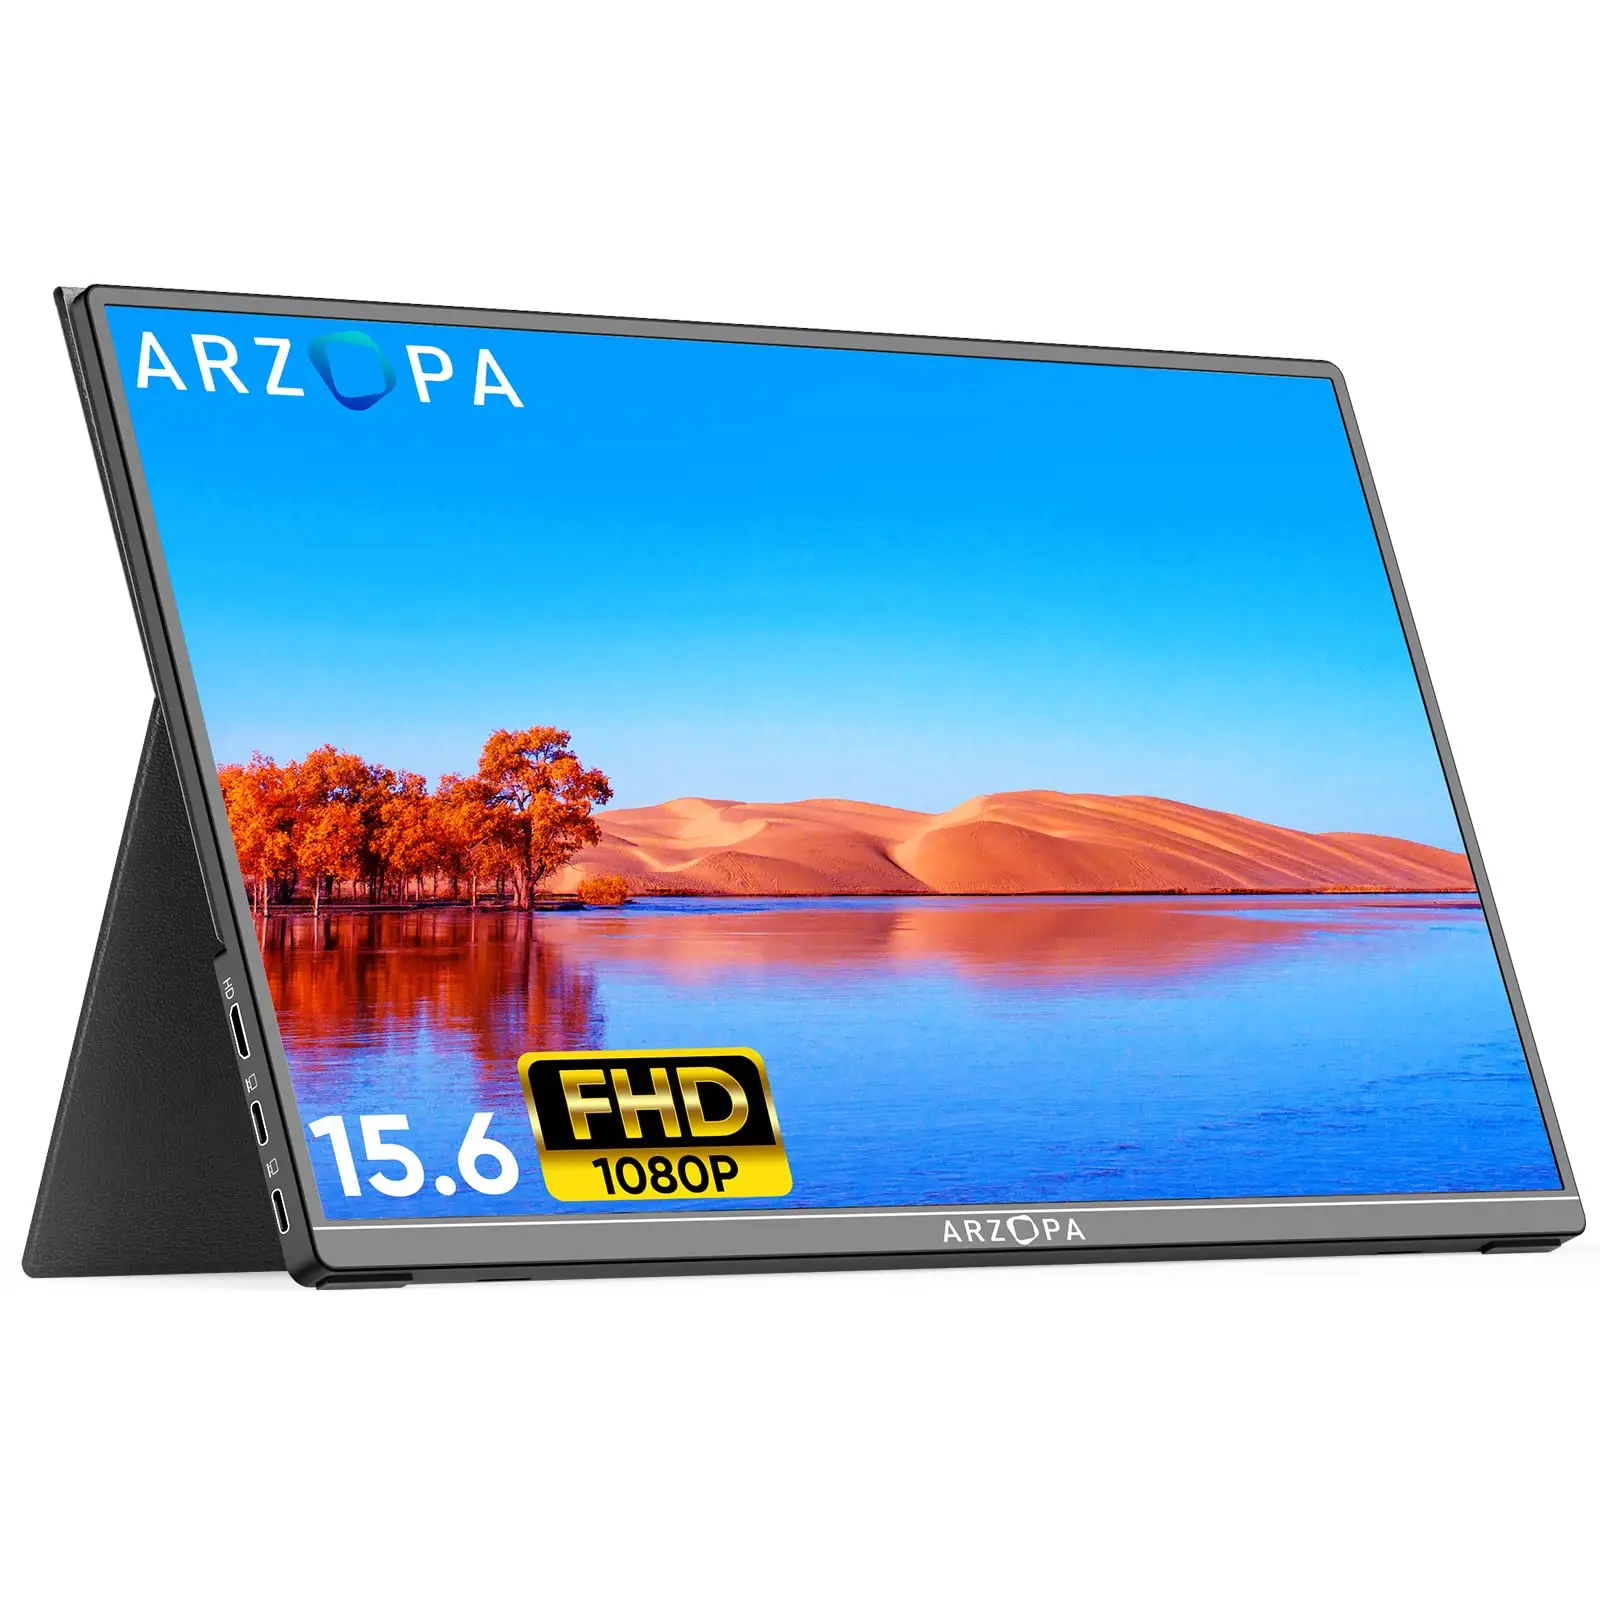 Arzopa 15.6 אינץ 1080P FHD מלא HD משחקי USB נייד Portatil צג מסך Extender עבור מחשב נייד נייד נייד צג